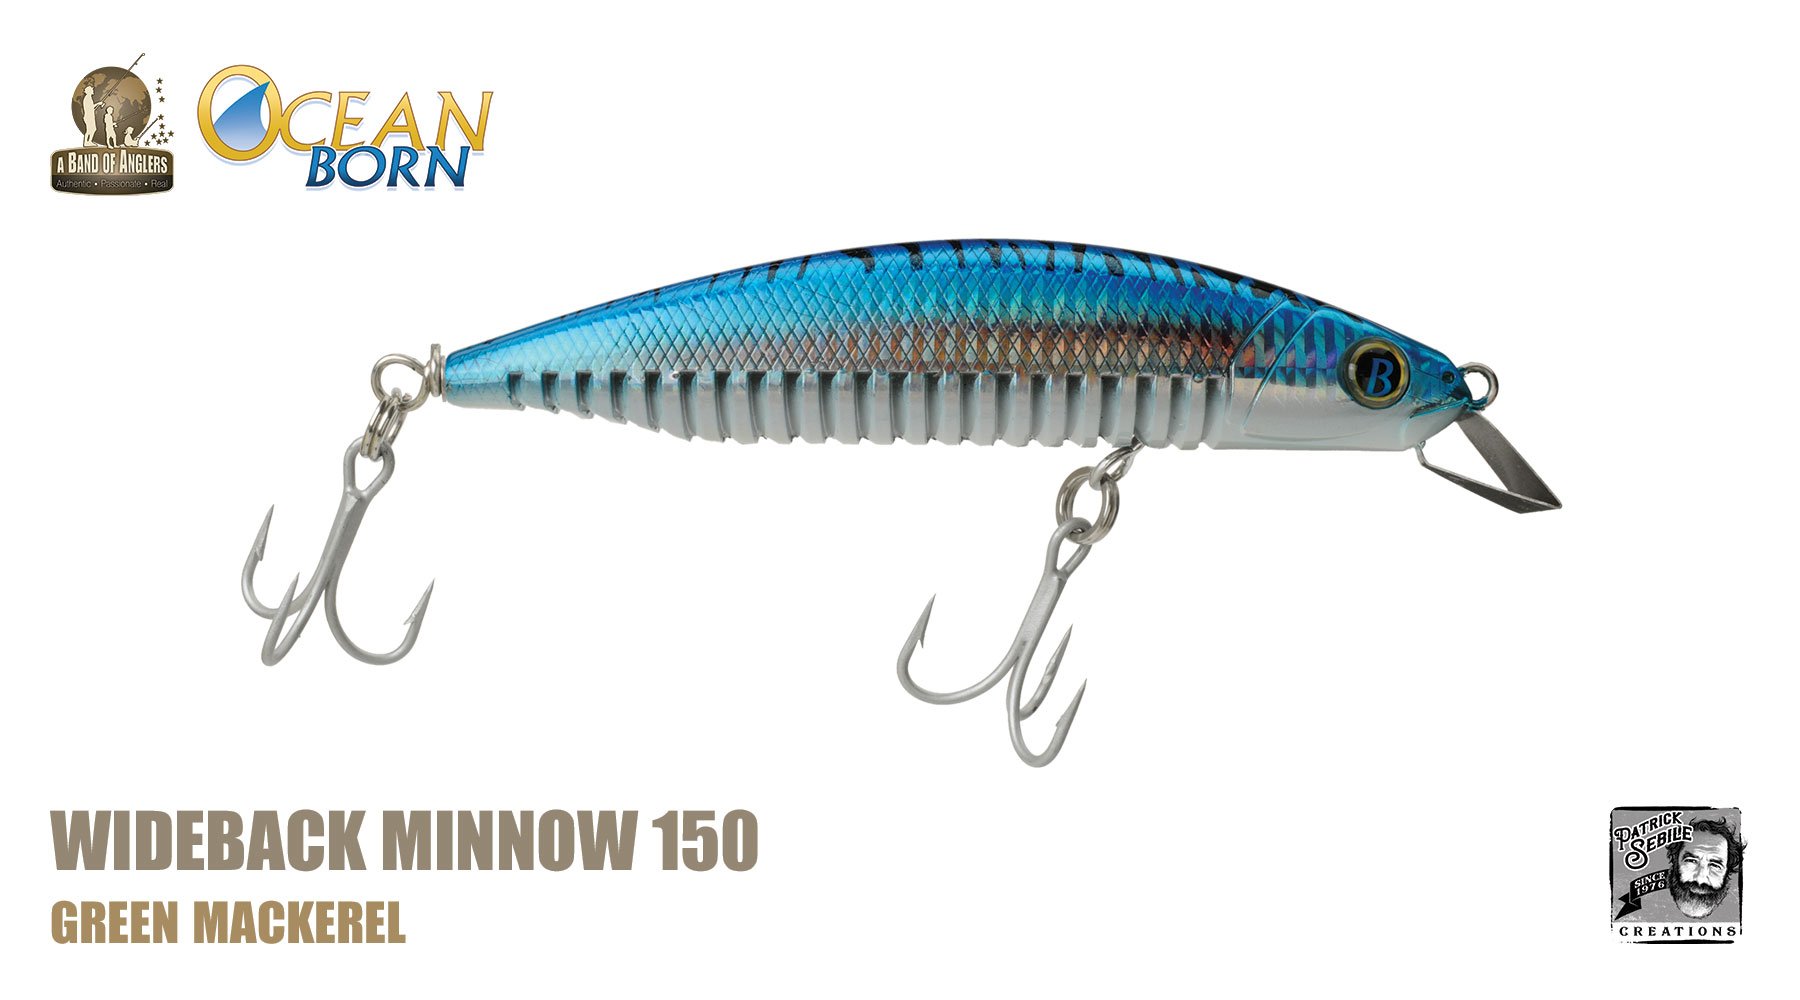 Wideback Minnow 150 – A Band of Anglers Inc.